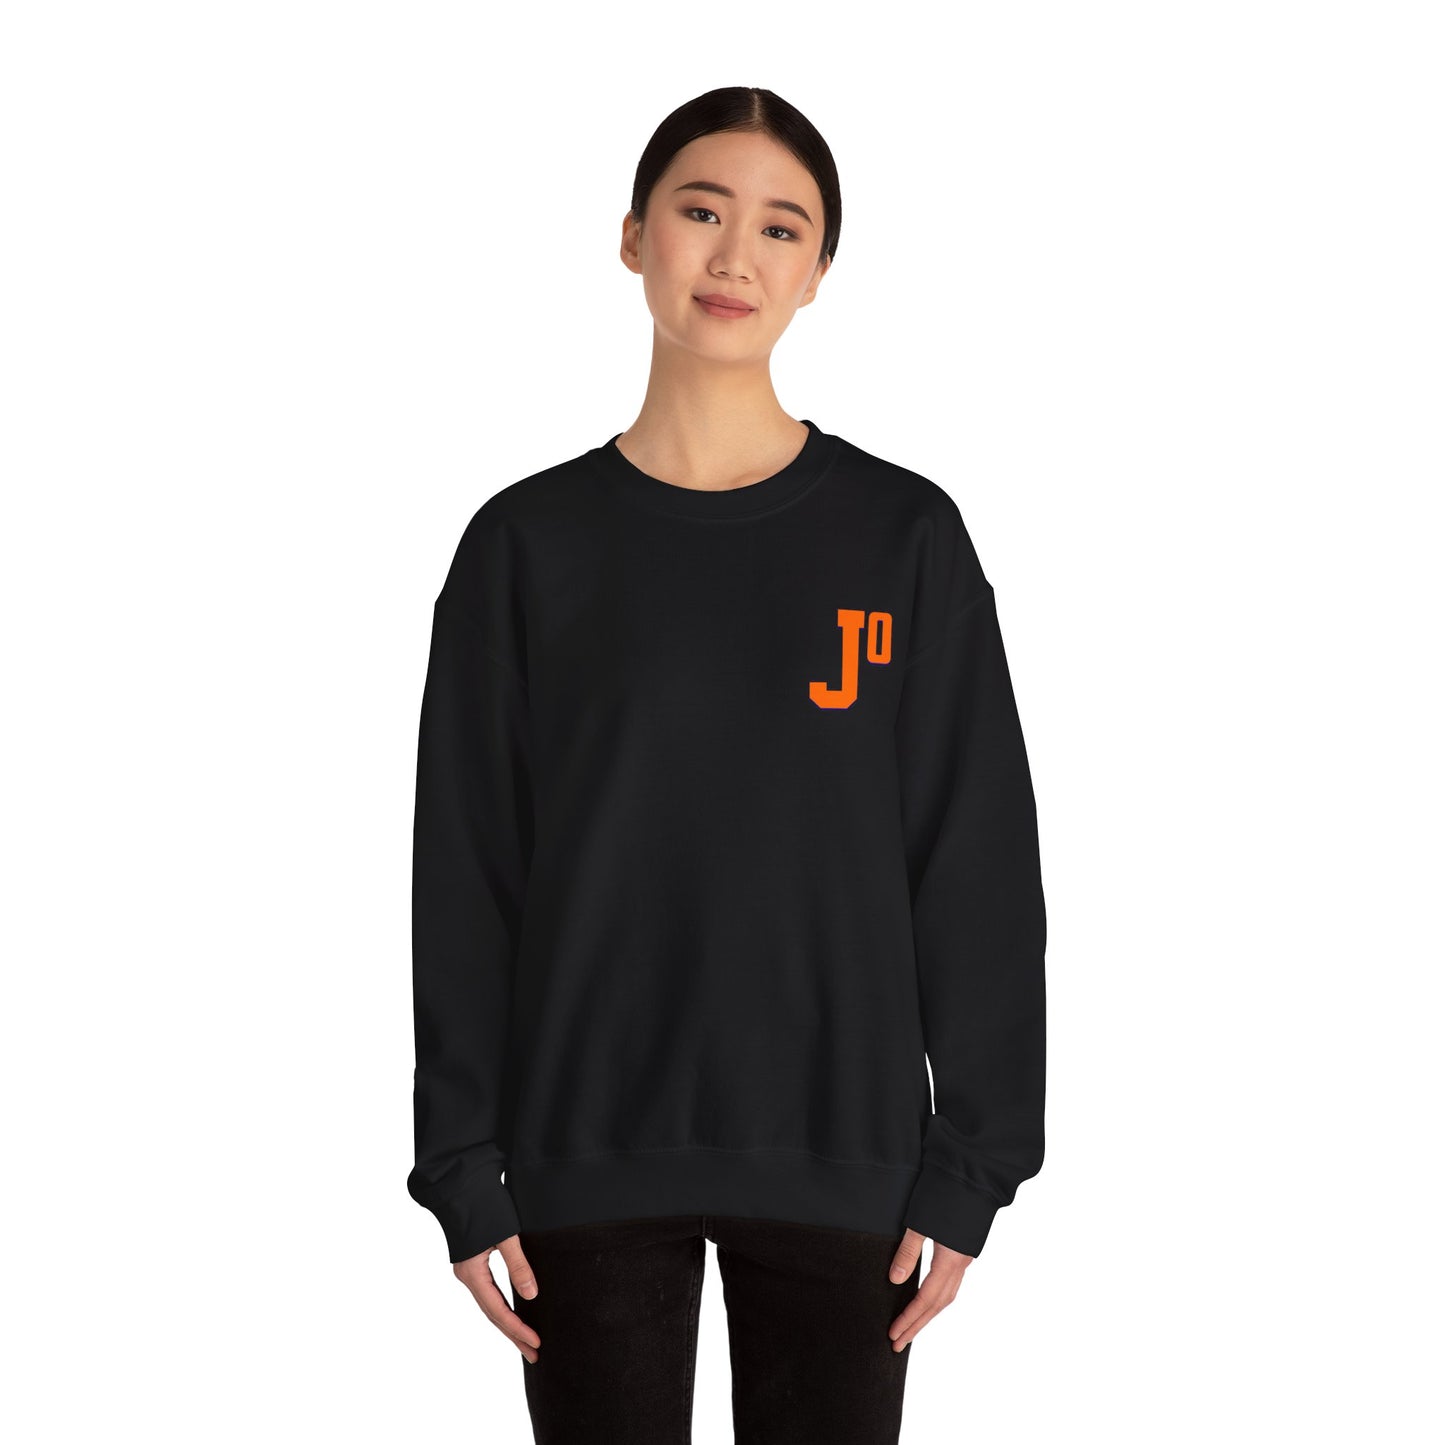 J0 Crewneck Sweatshirt